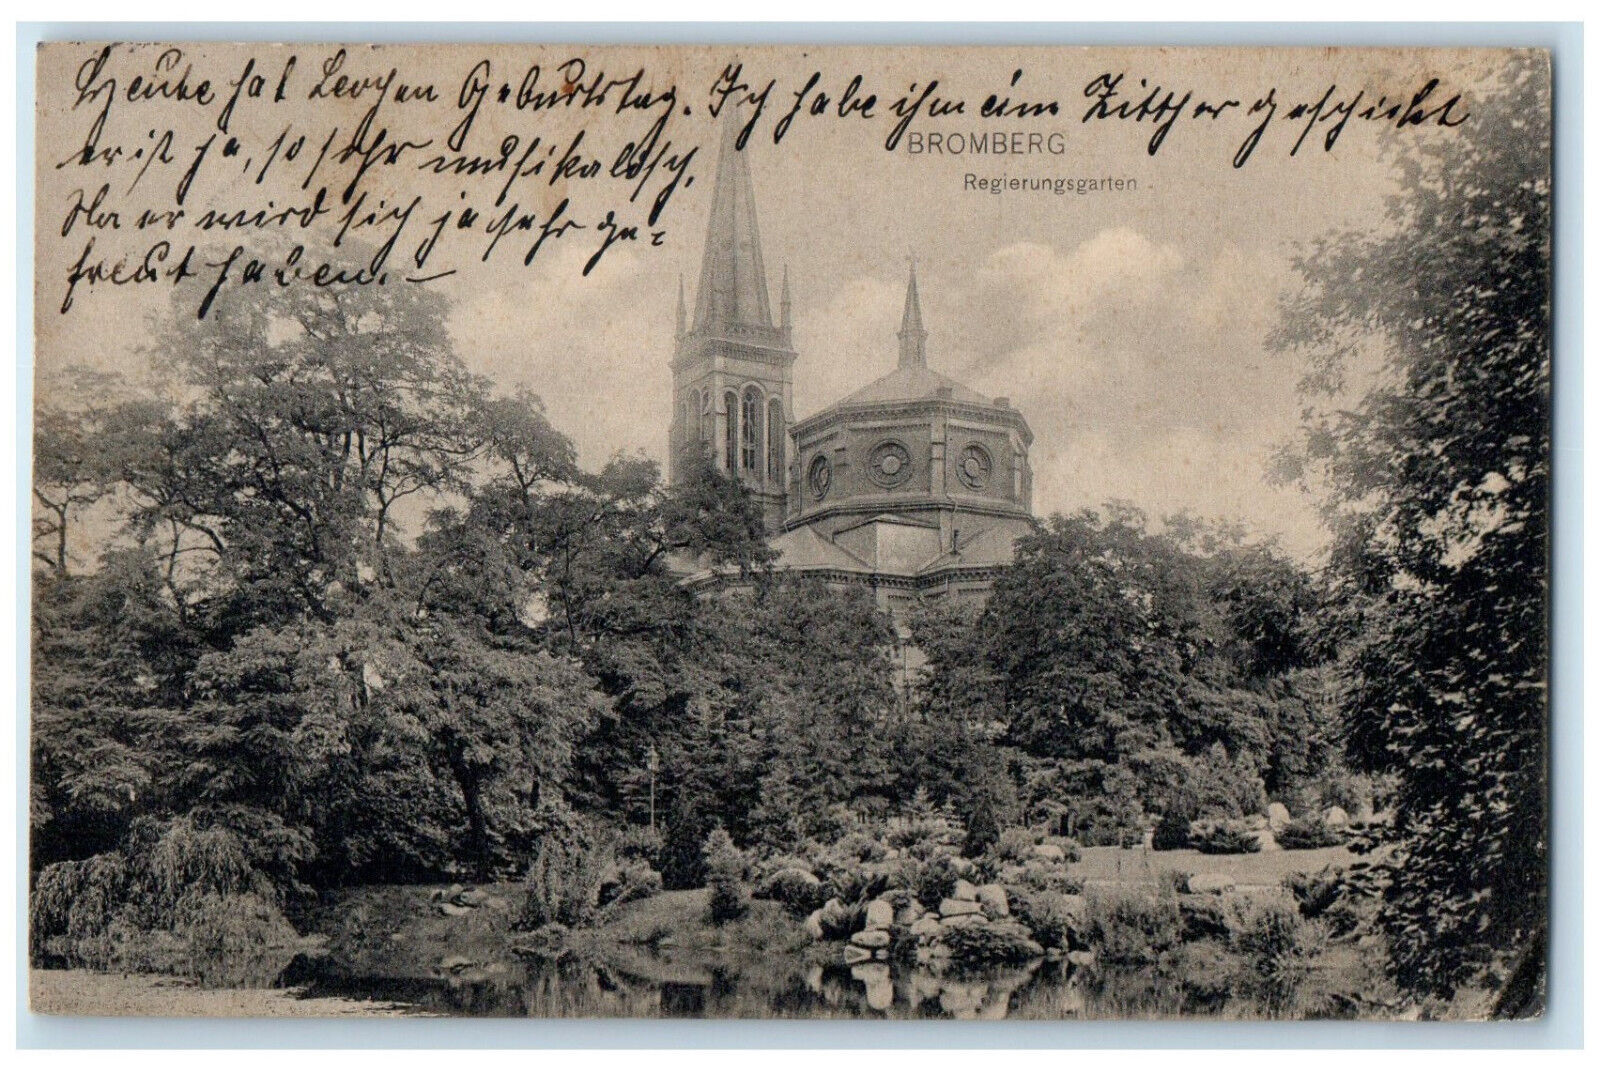 c1910 View of Regierungsgarten Bromberg Austria Unposted Antique Postcard